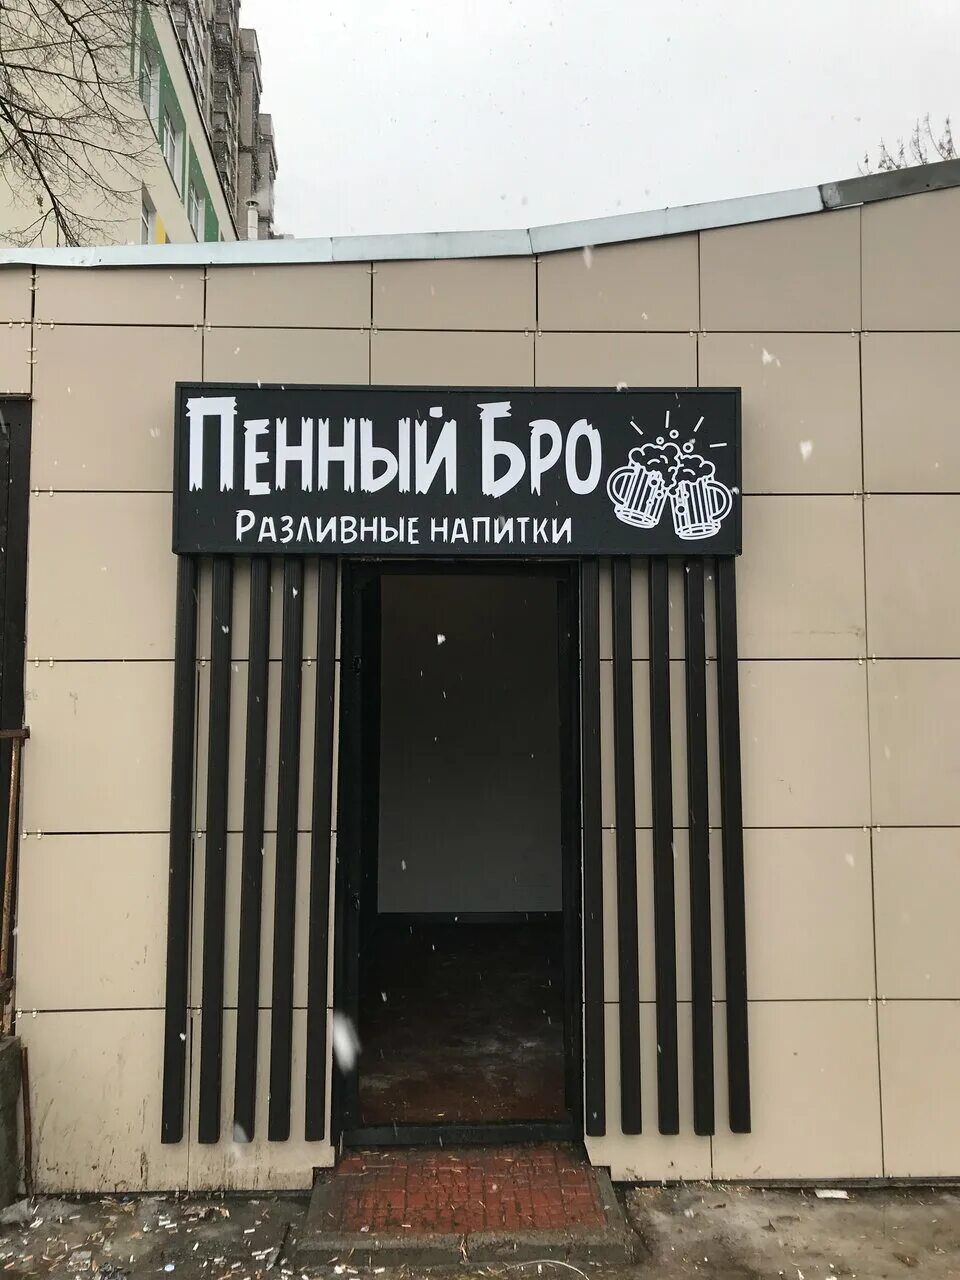 Бро магазине. Магазин бро. Re bro Нижний Новгород. Пробка бро магазин. Крисбро магазин.